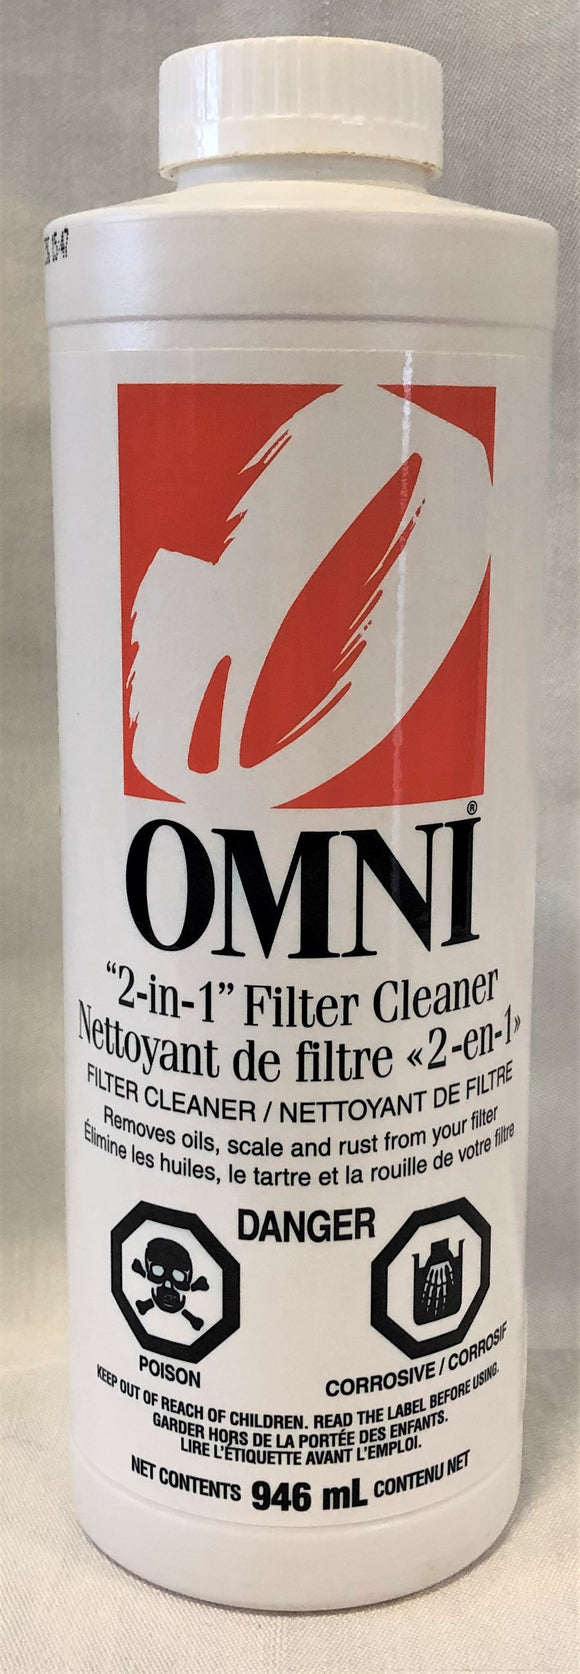 Omni 2-in-1 Filter Cleaner